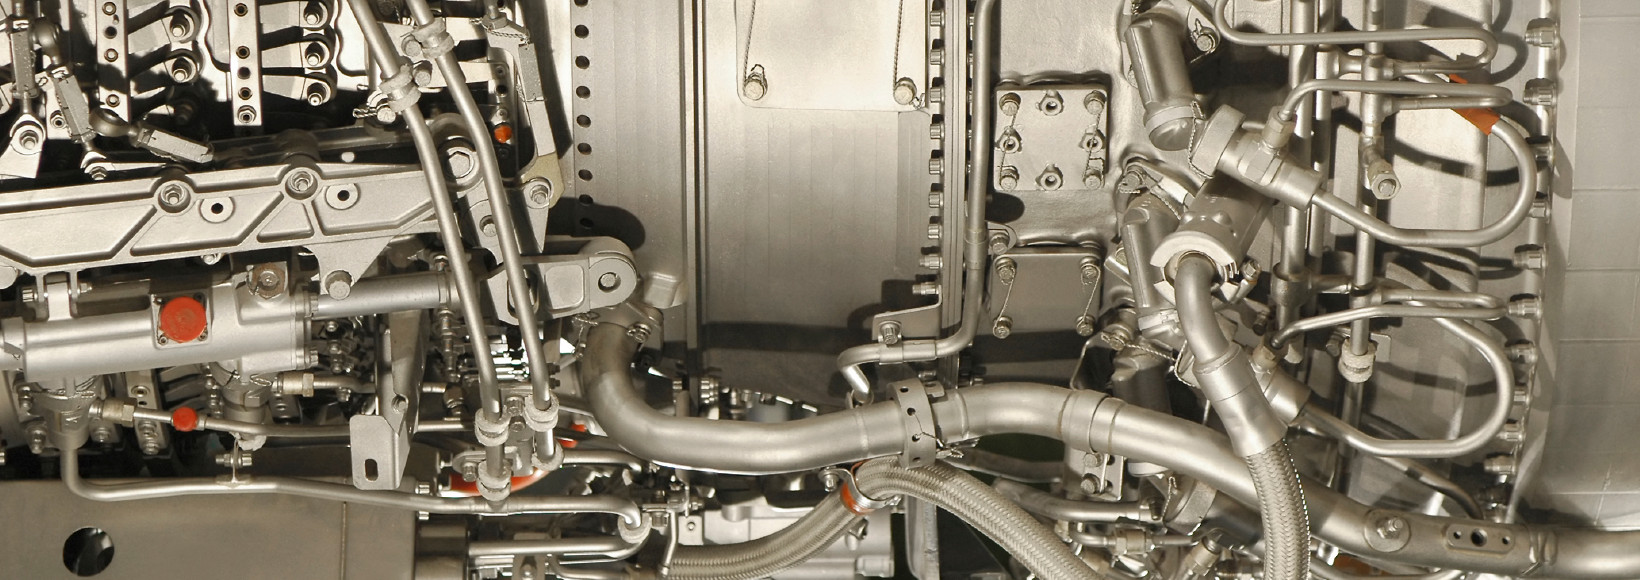 Jet Engine Components